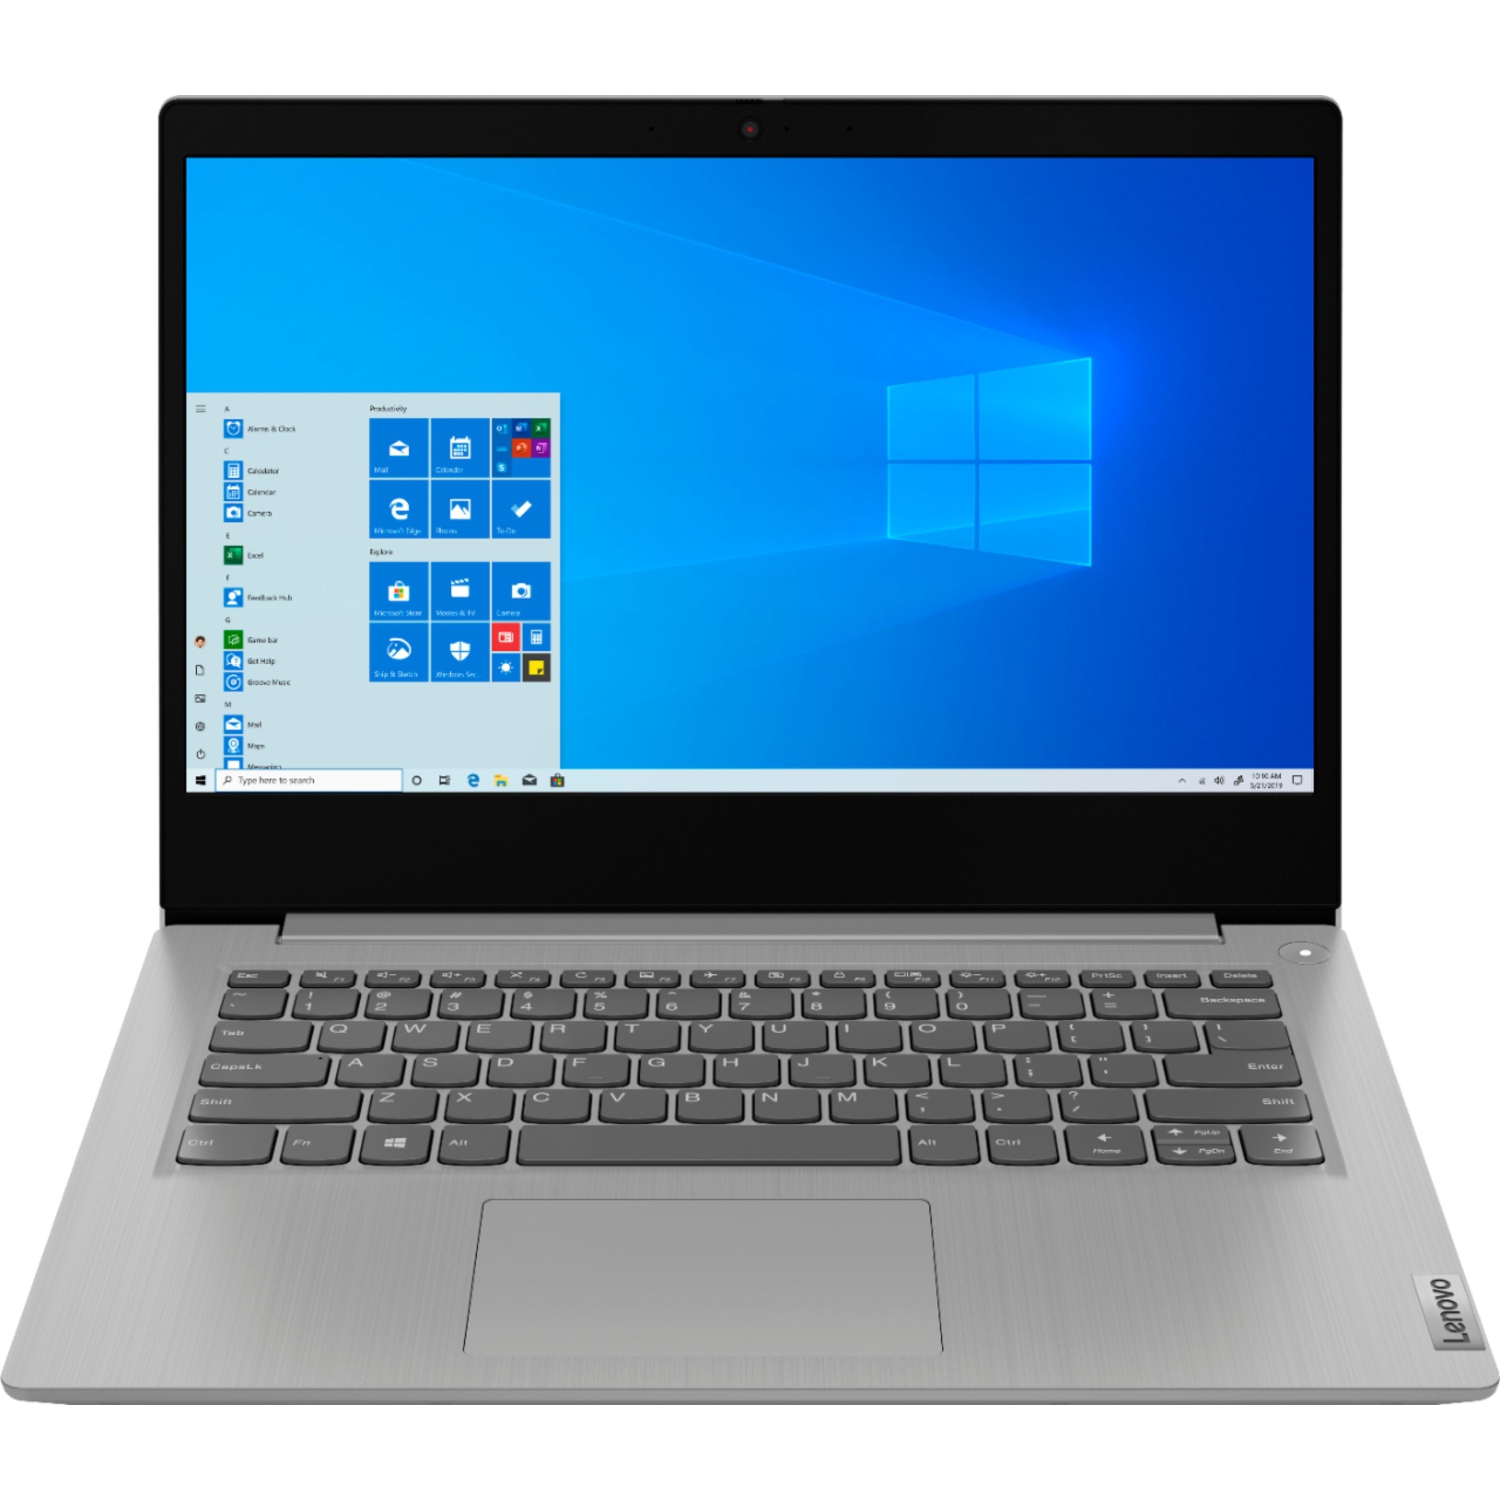 Lenovo IdeaPad 3 14.0" Laptop (Intel Pentium Silver N5030, 4GB RAM, 128GB SSD, Windows 10 S Mode) - Platinum Grey (81WH004LUS)